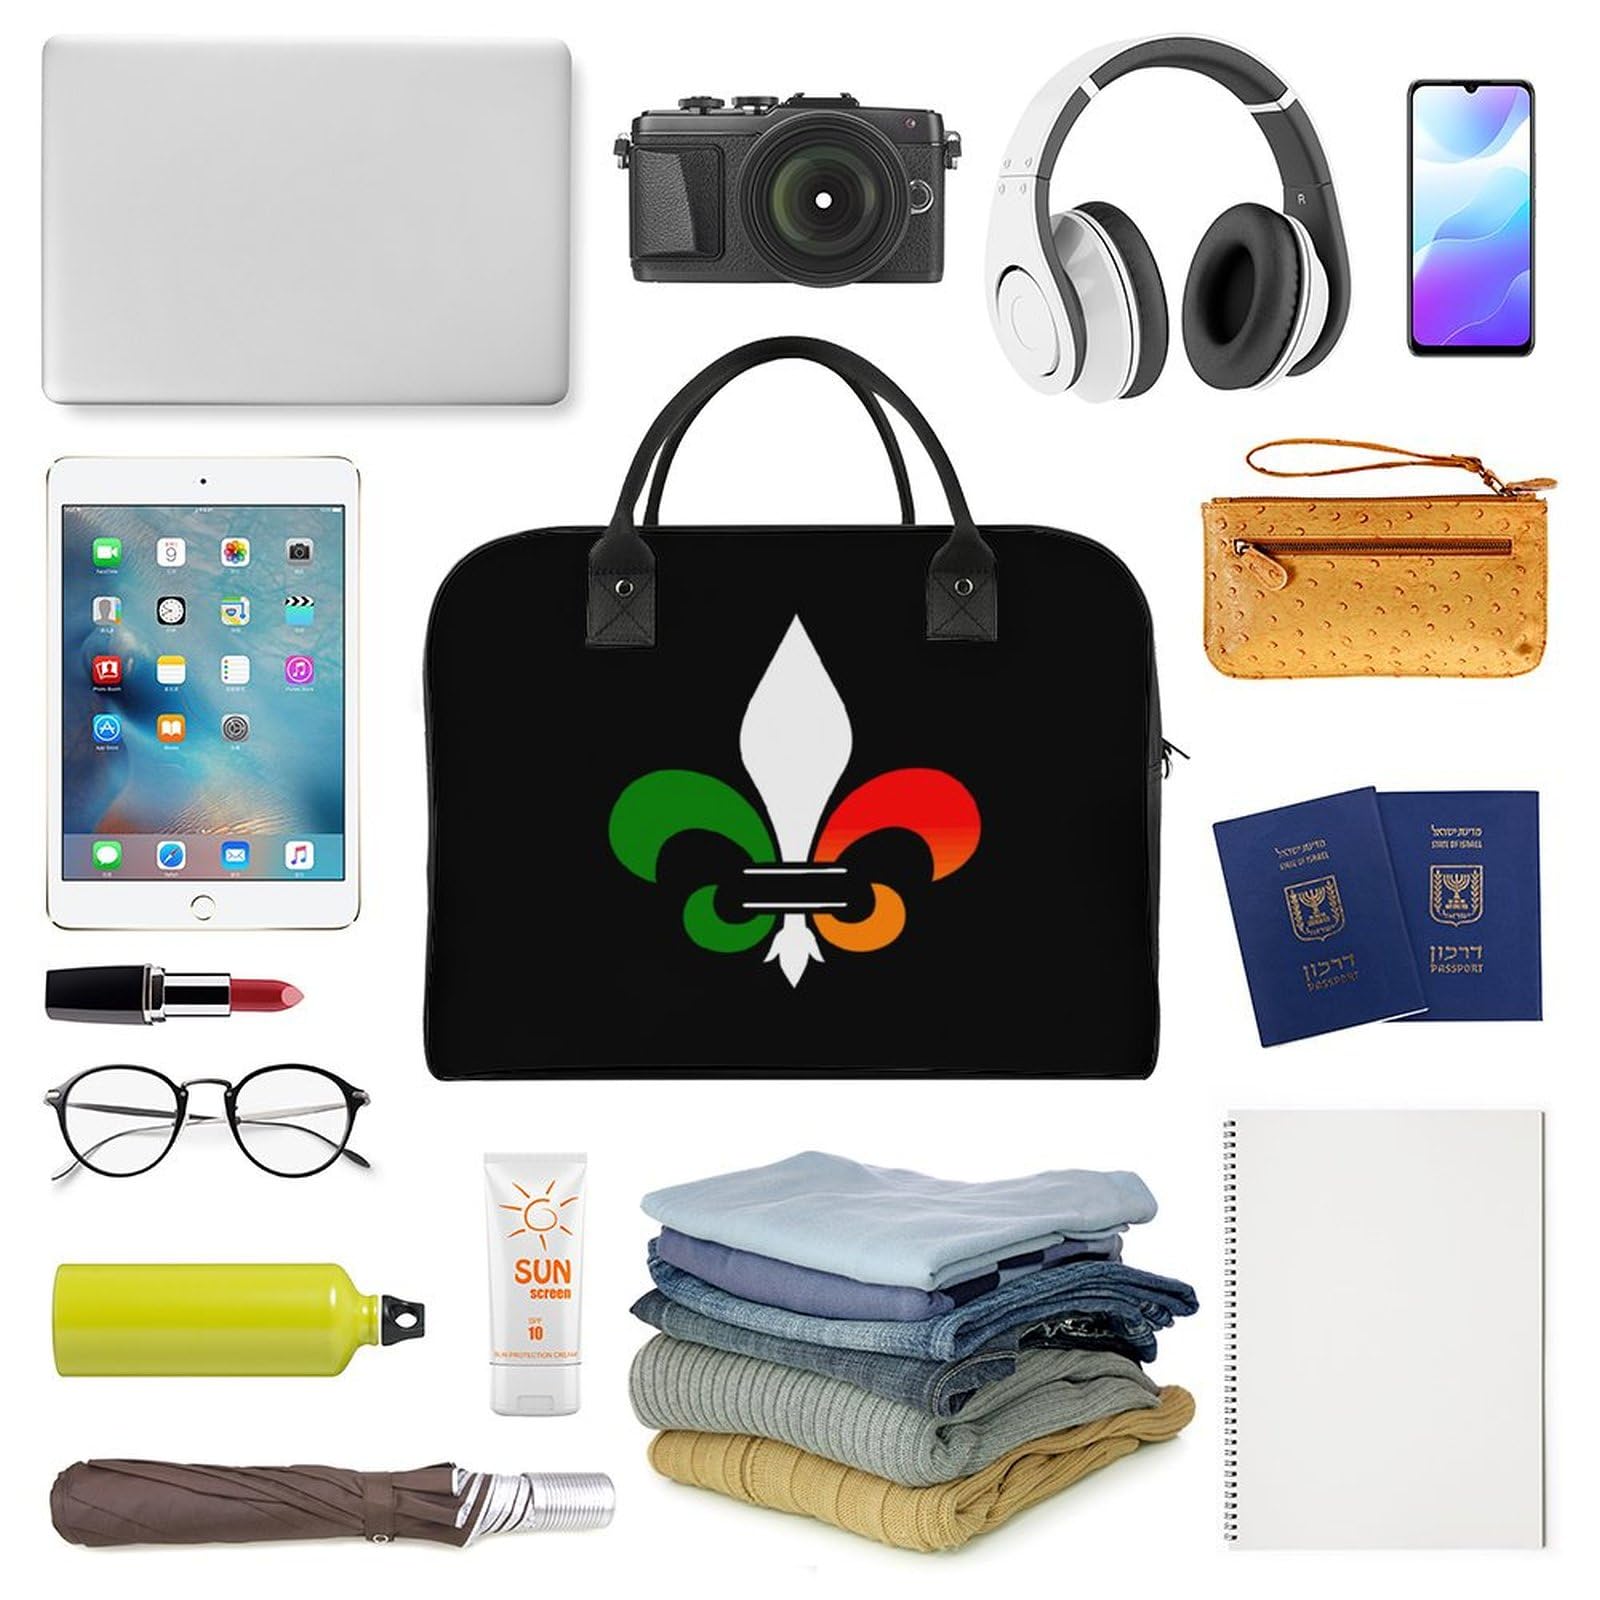 Fleur De Lis Irish Italian Large Crossbody Bag Laptop Bags Shoulder Handbags Tote with Strap for Travel Office